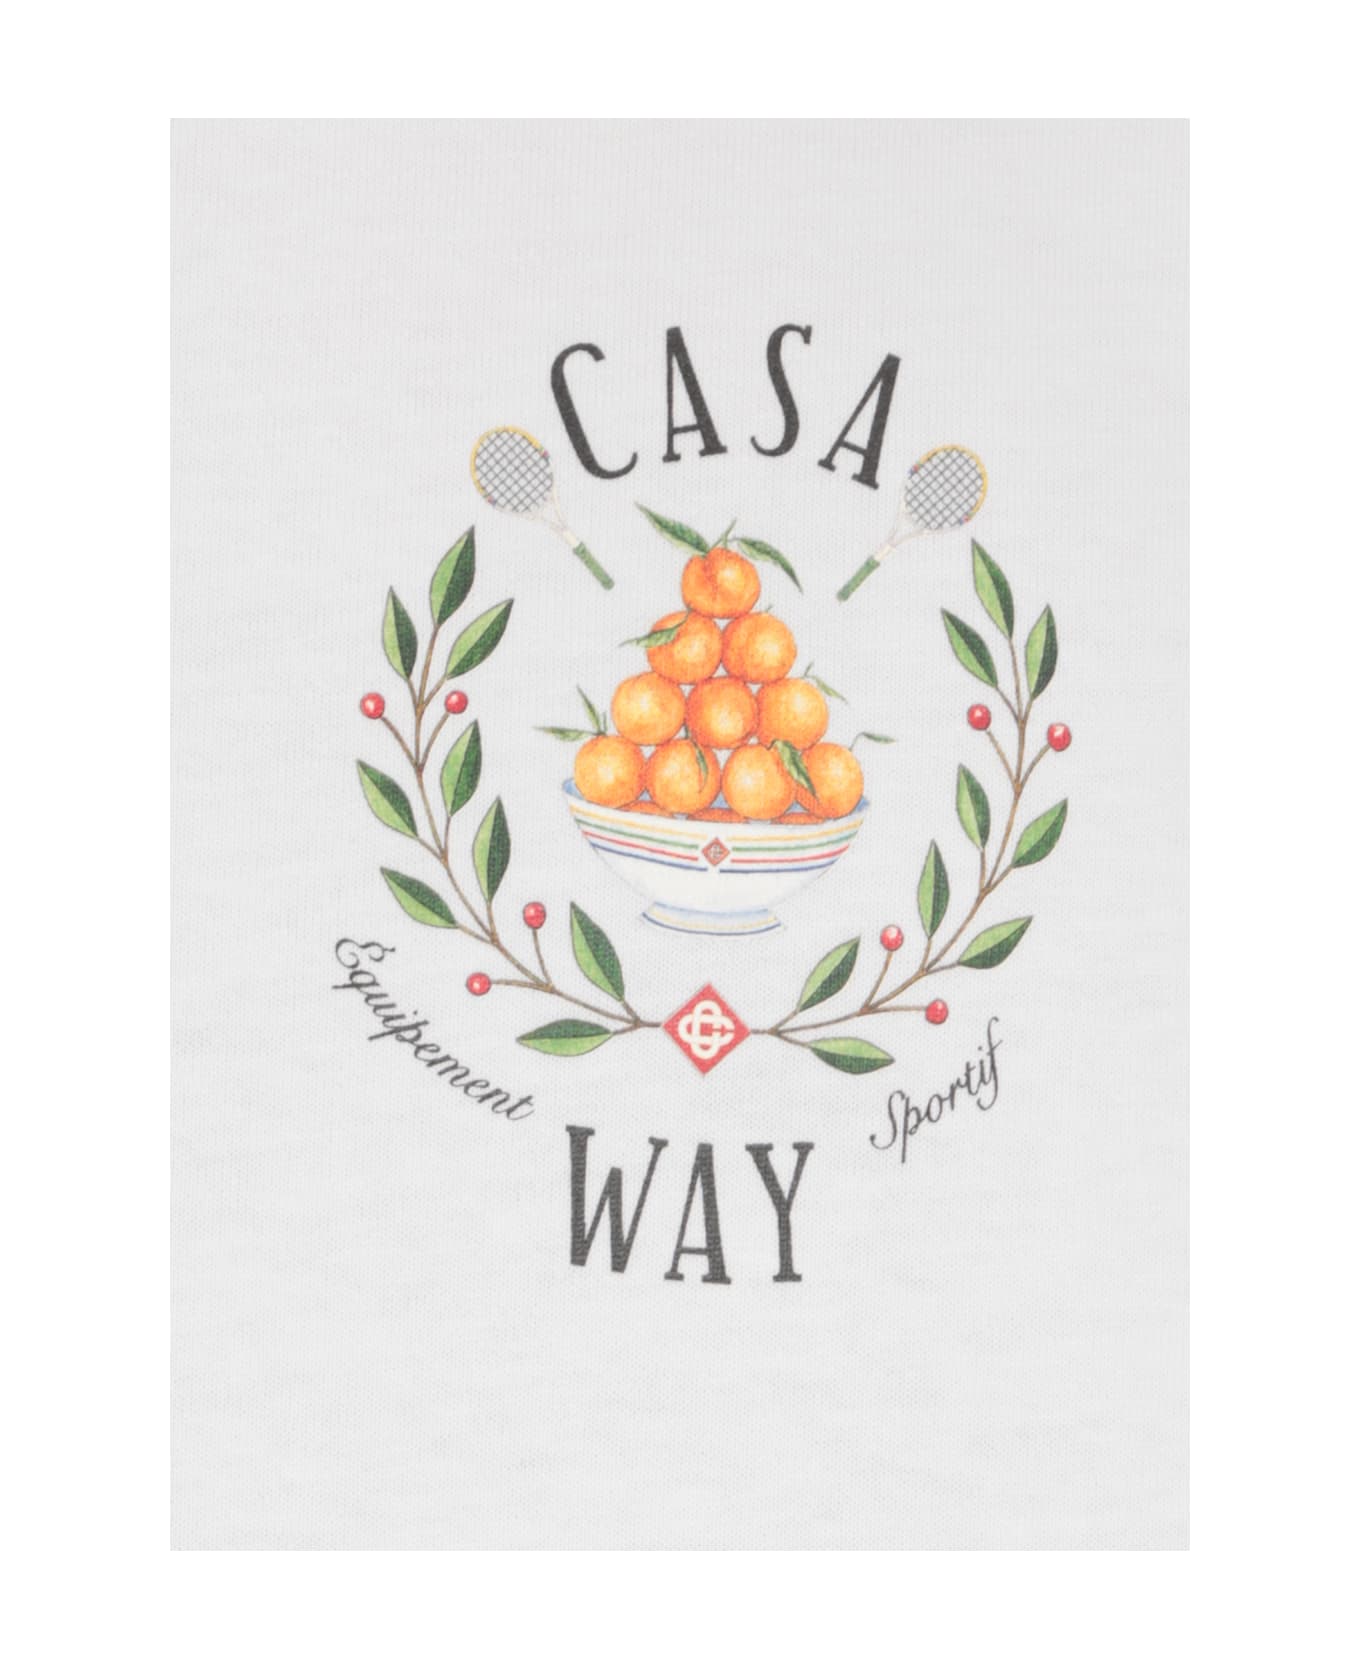 Casablanca 'casa Way' White Organic Cotton T-shirt - Casa Way